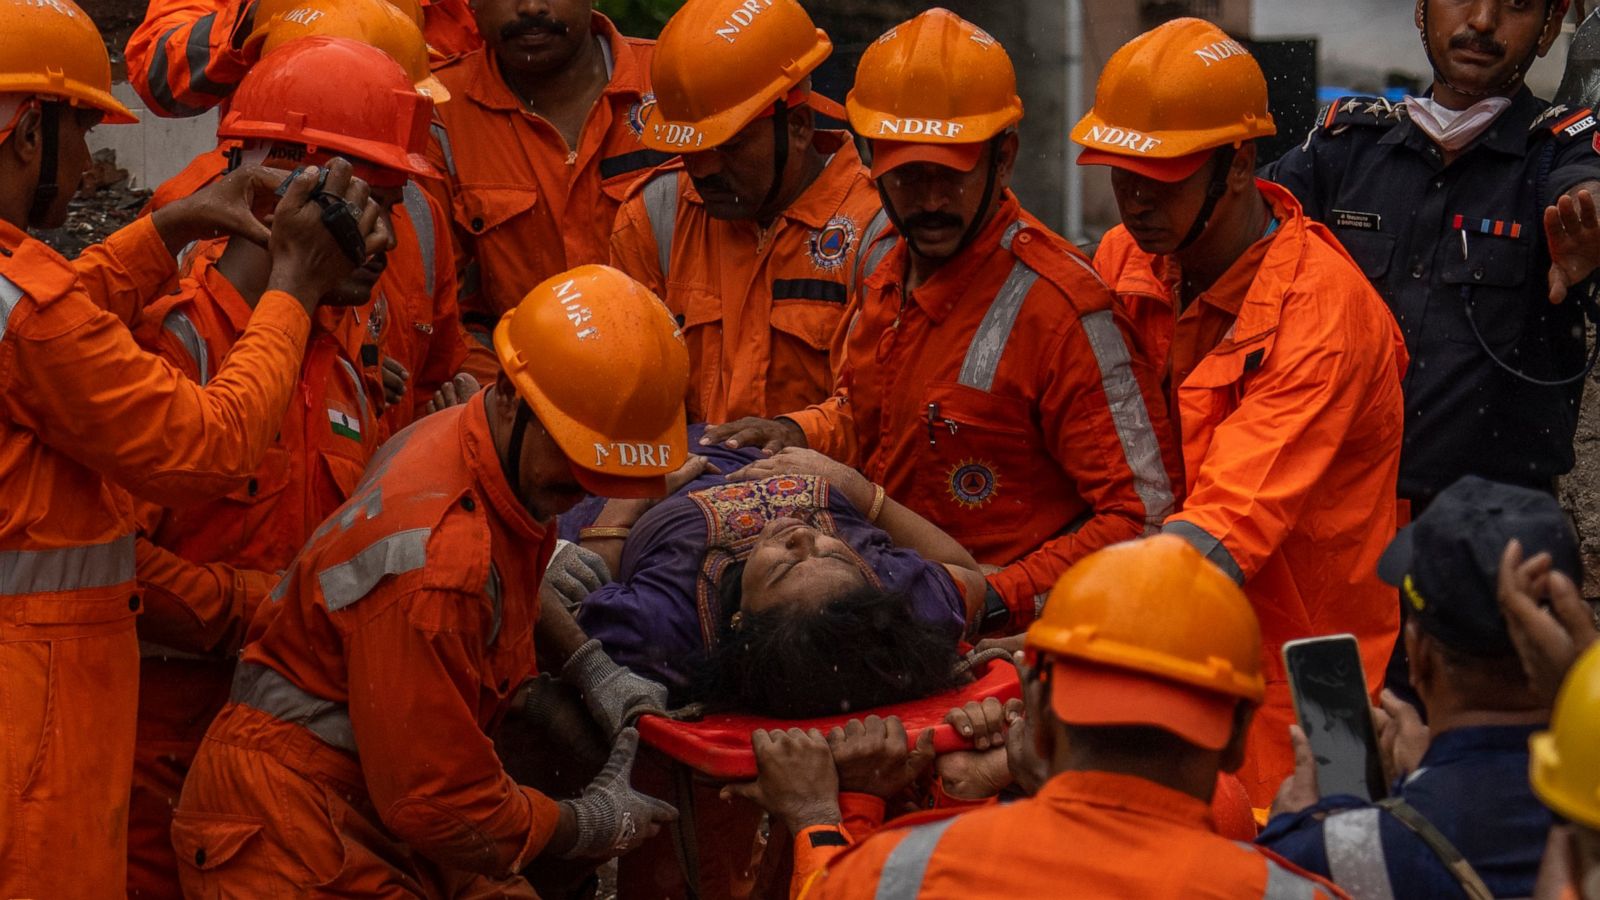 Building collapse kills 3 people in India's Mumbai city - ABC News